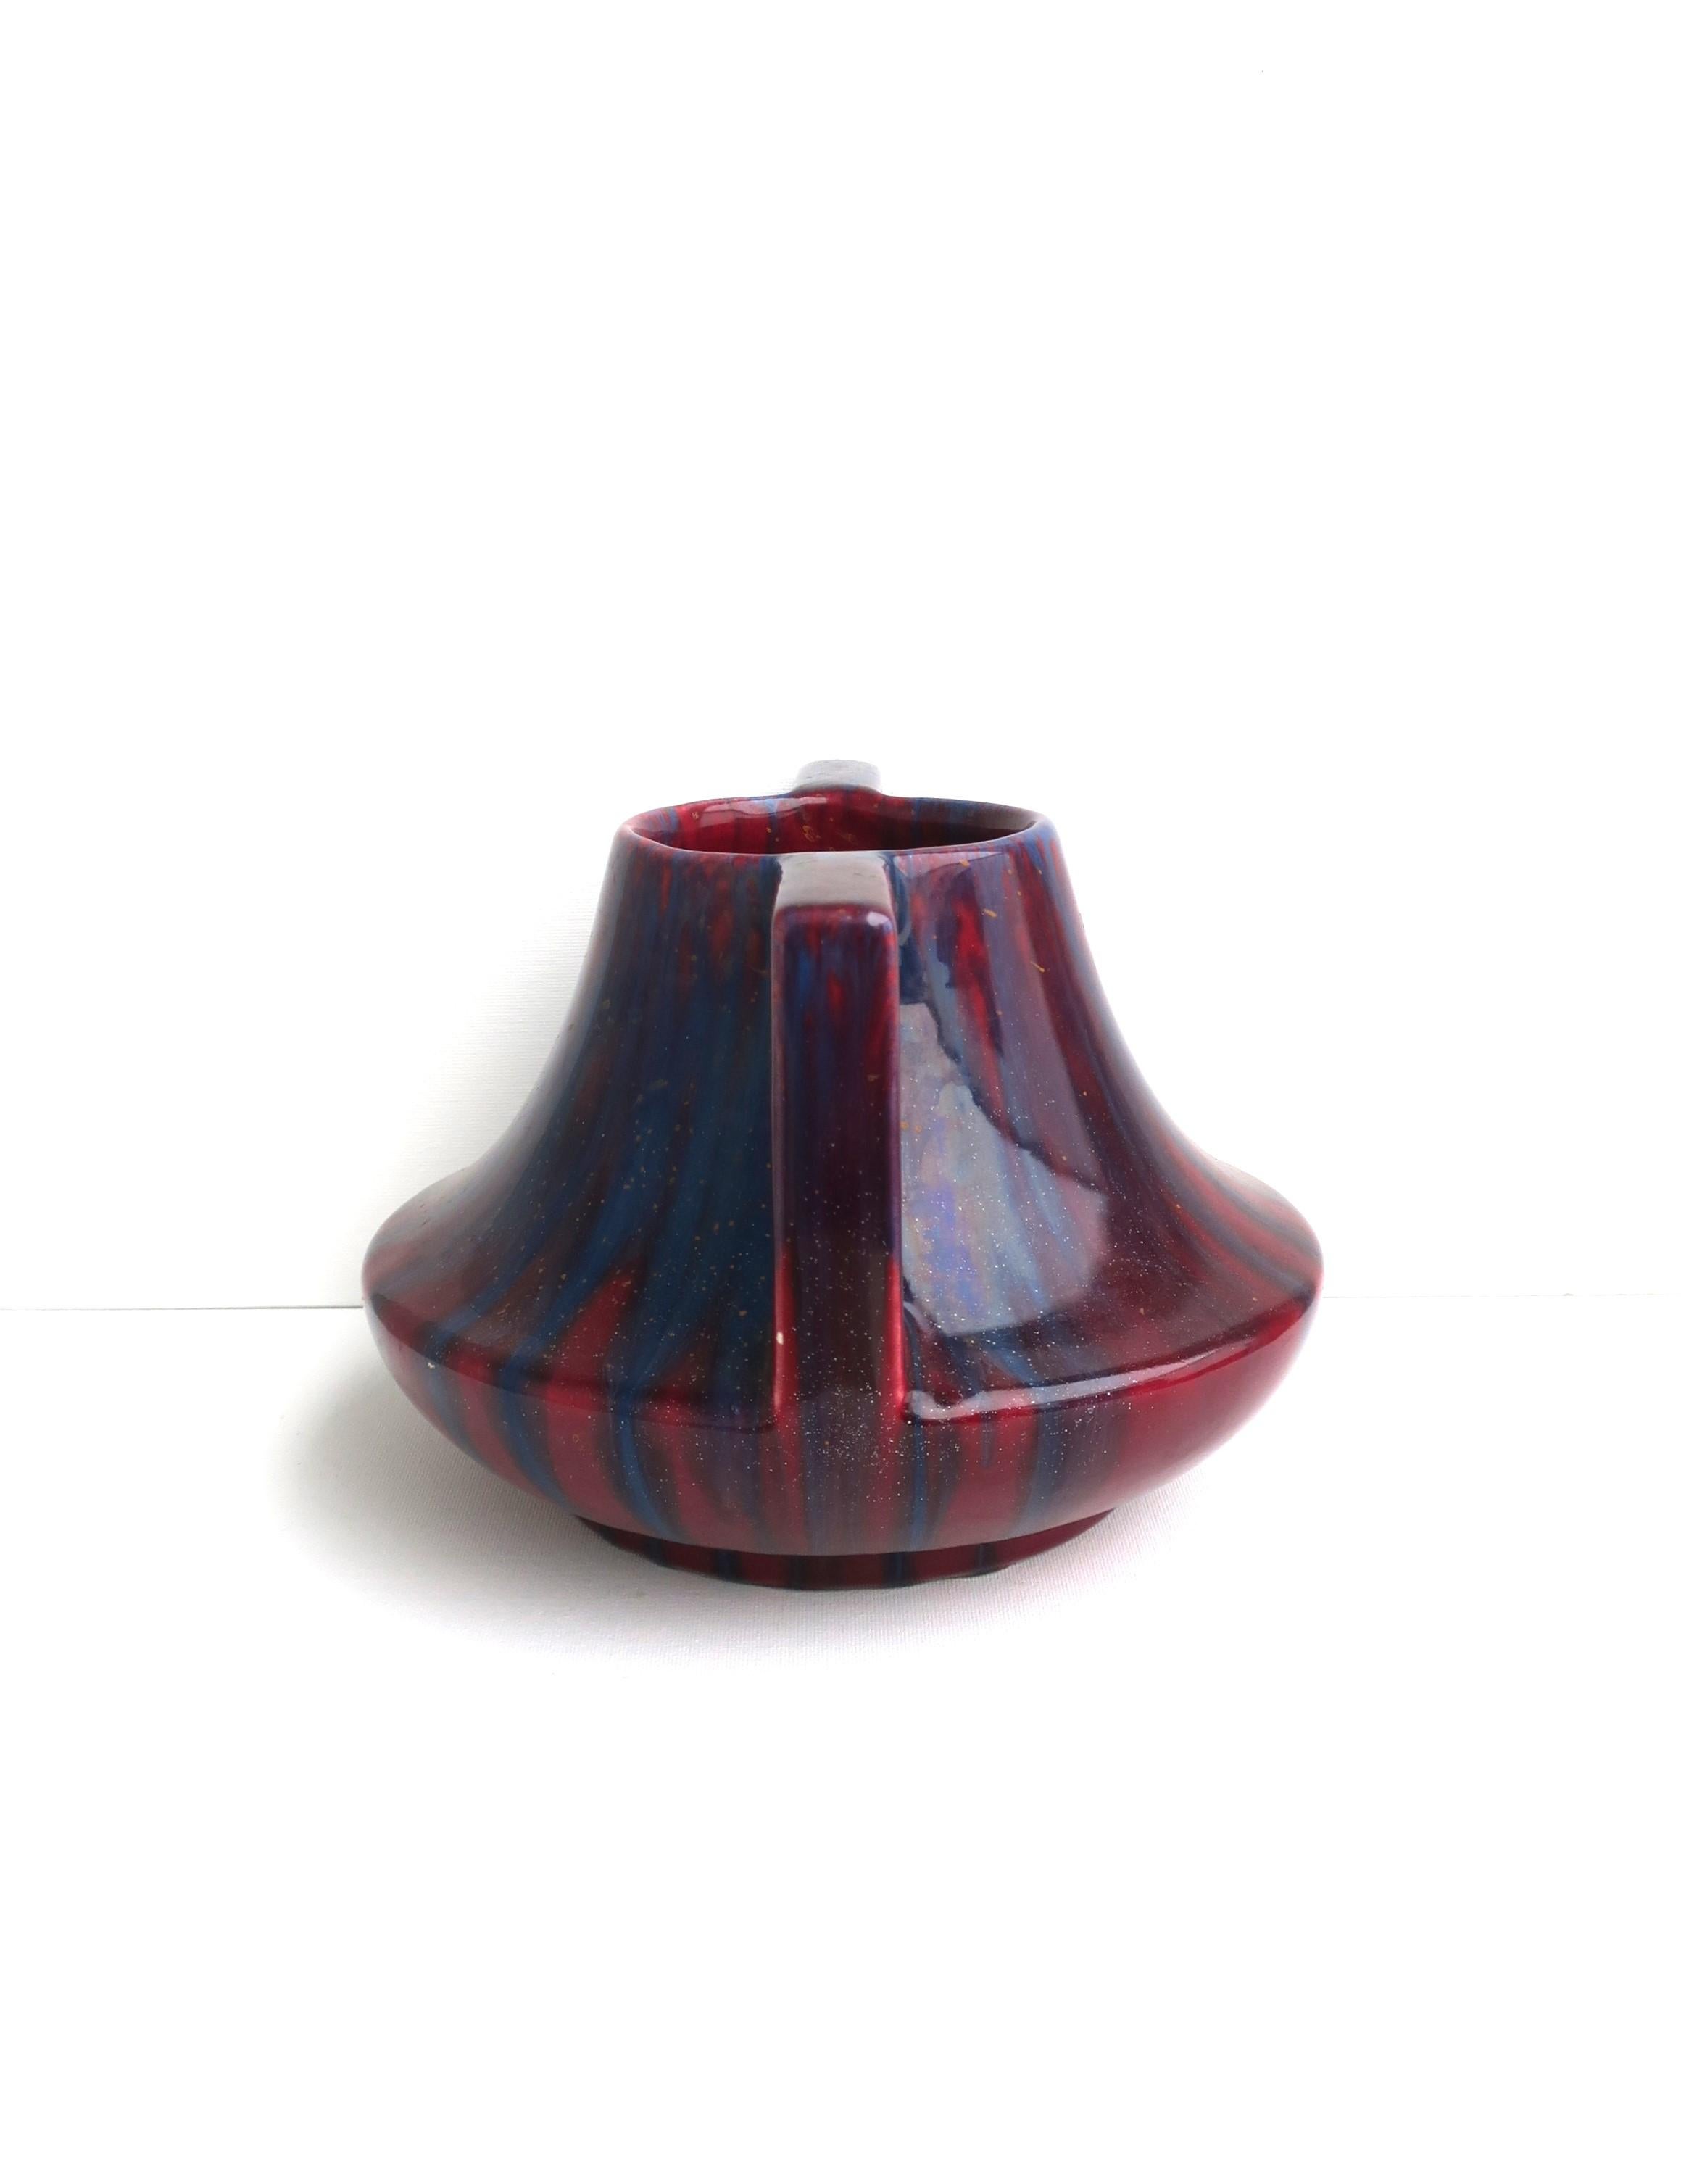 Japanese Red Burgundy and Blue Ceramic Amphora Vase  For Sale